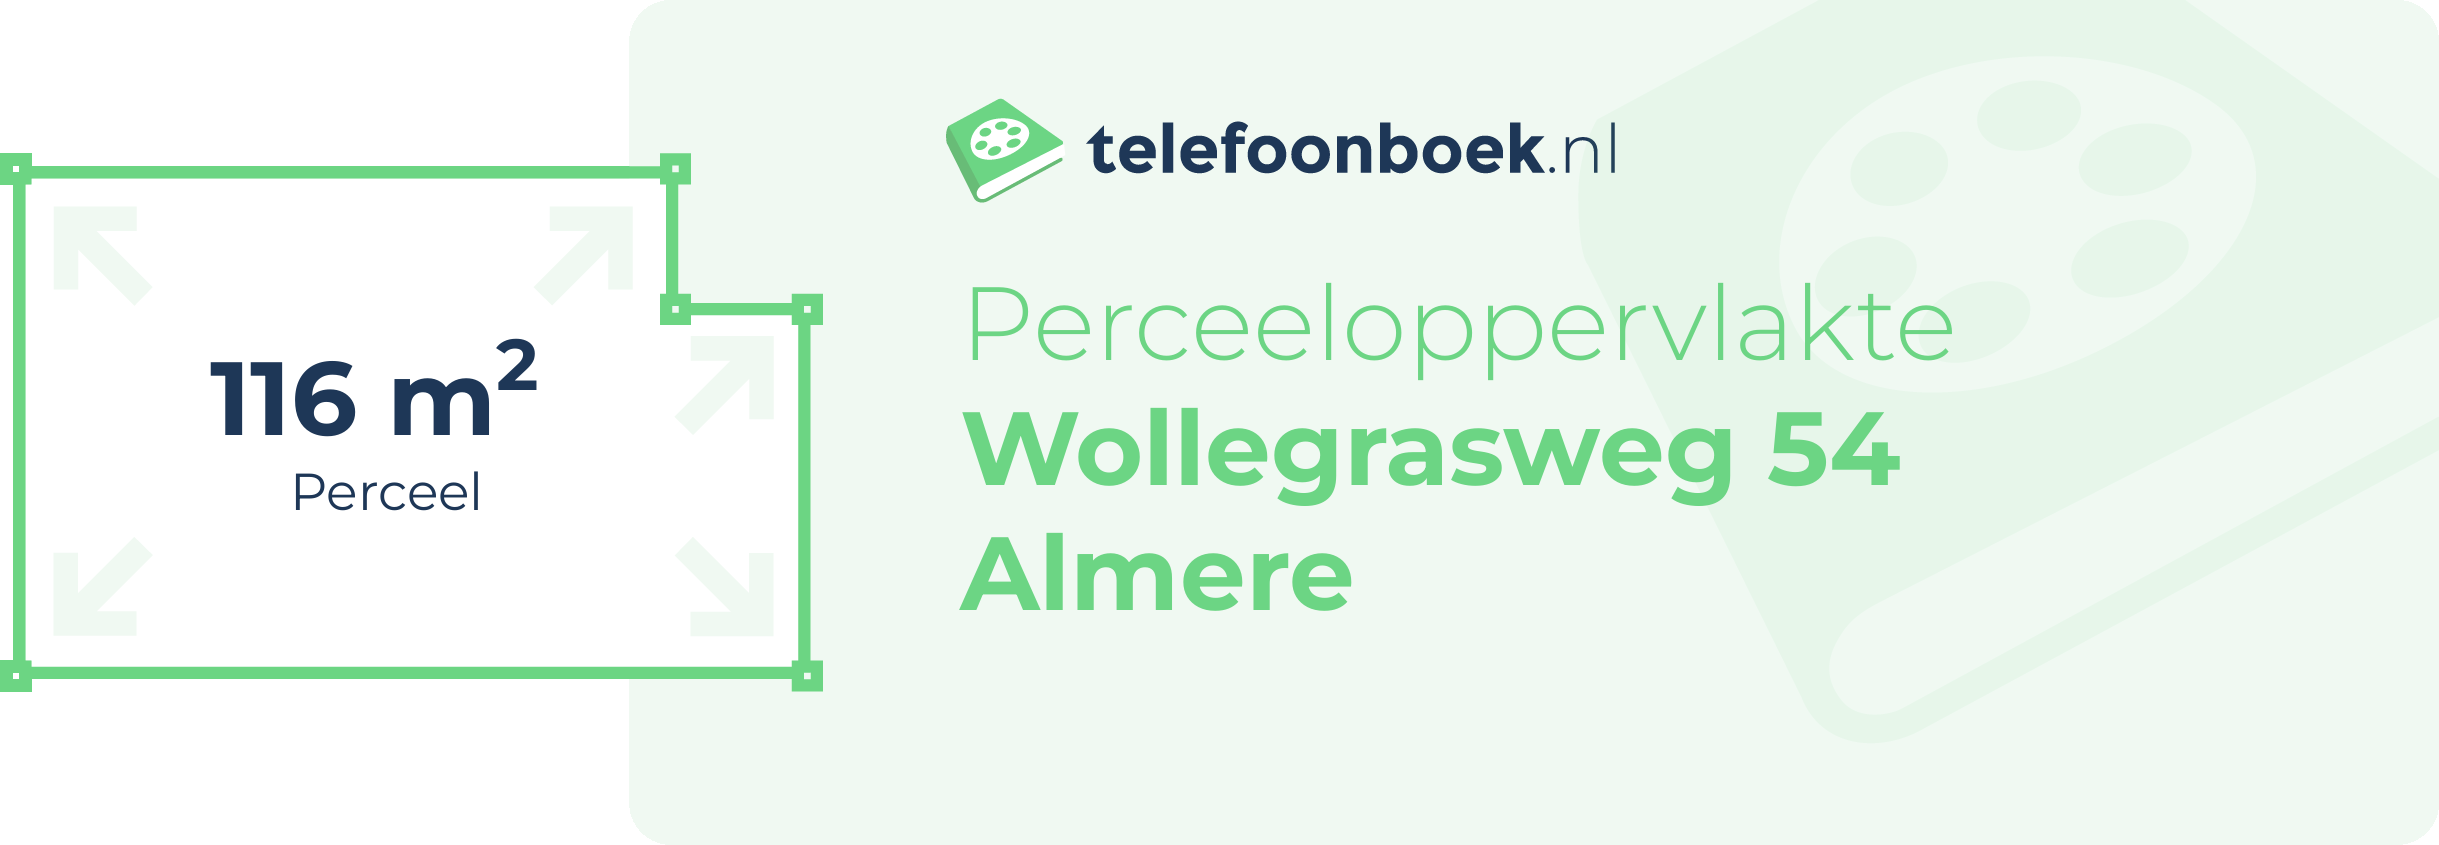 Perceeloppervlakte Wollegrasweg 54 Almere